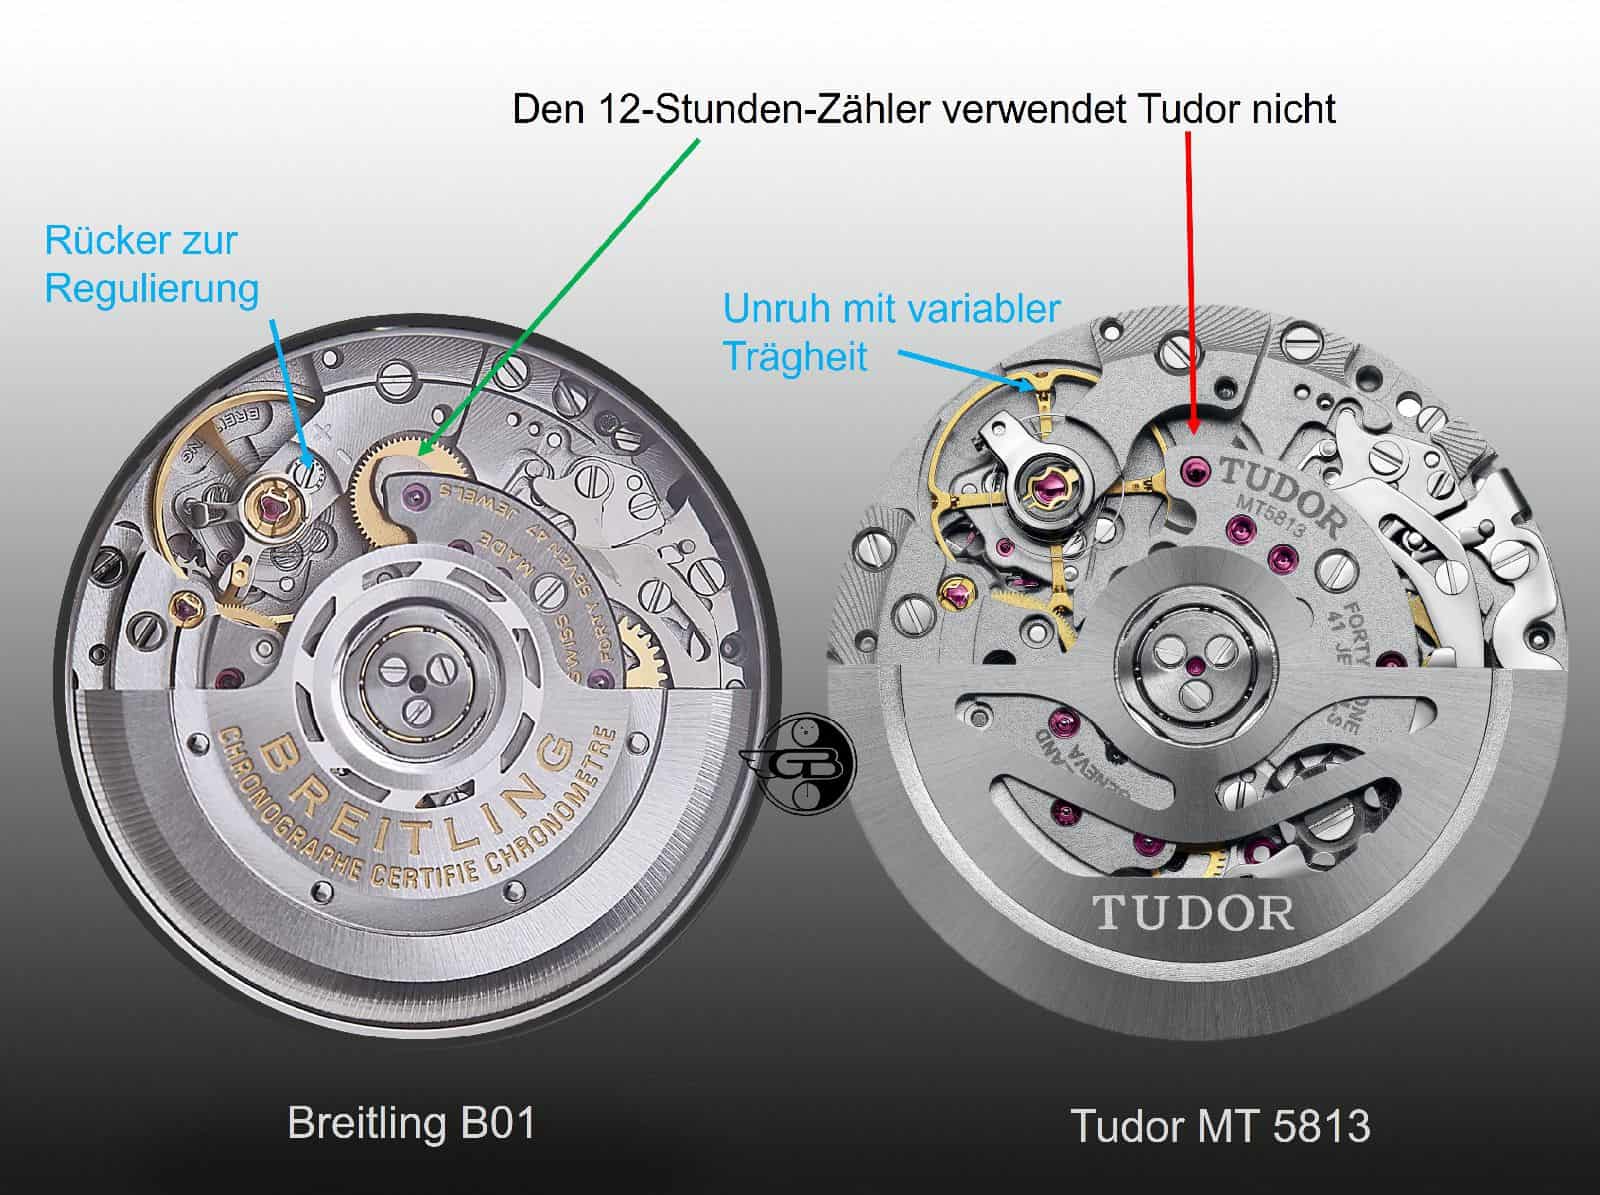 Breitling Kaliber B01 vs Tudor Kaliber MT5813 